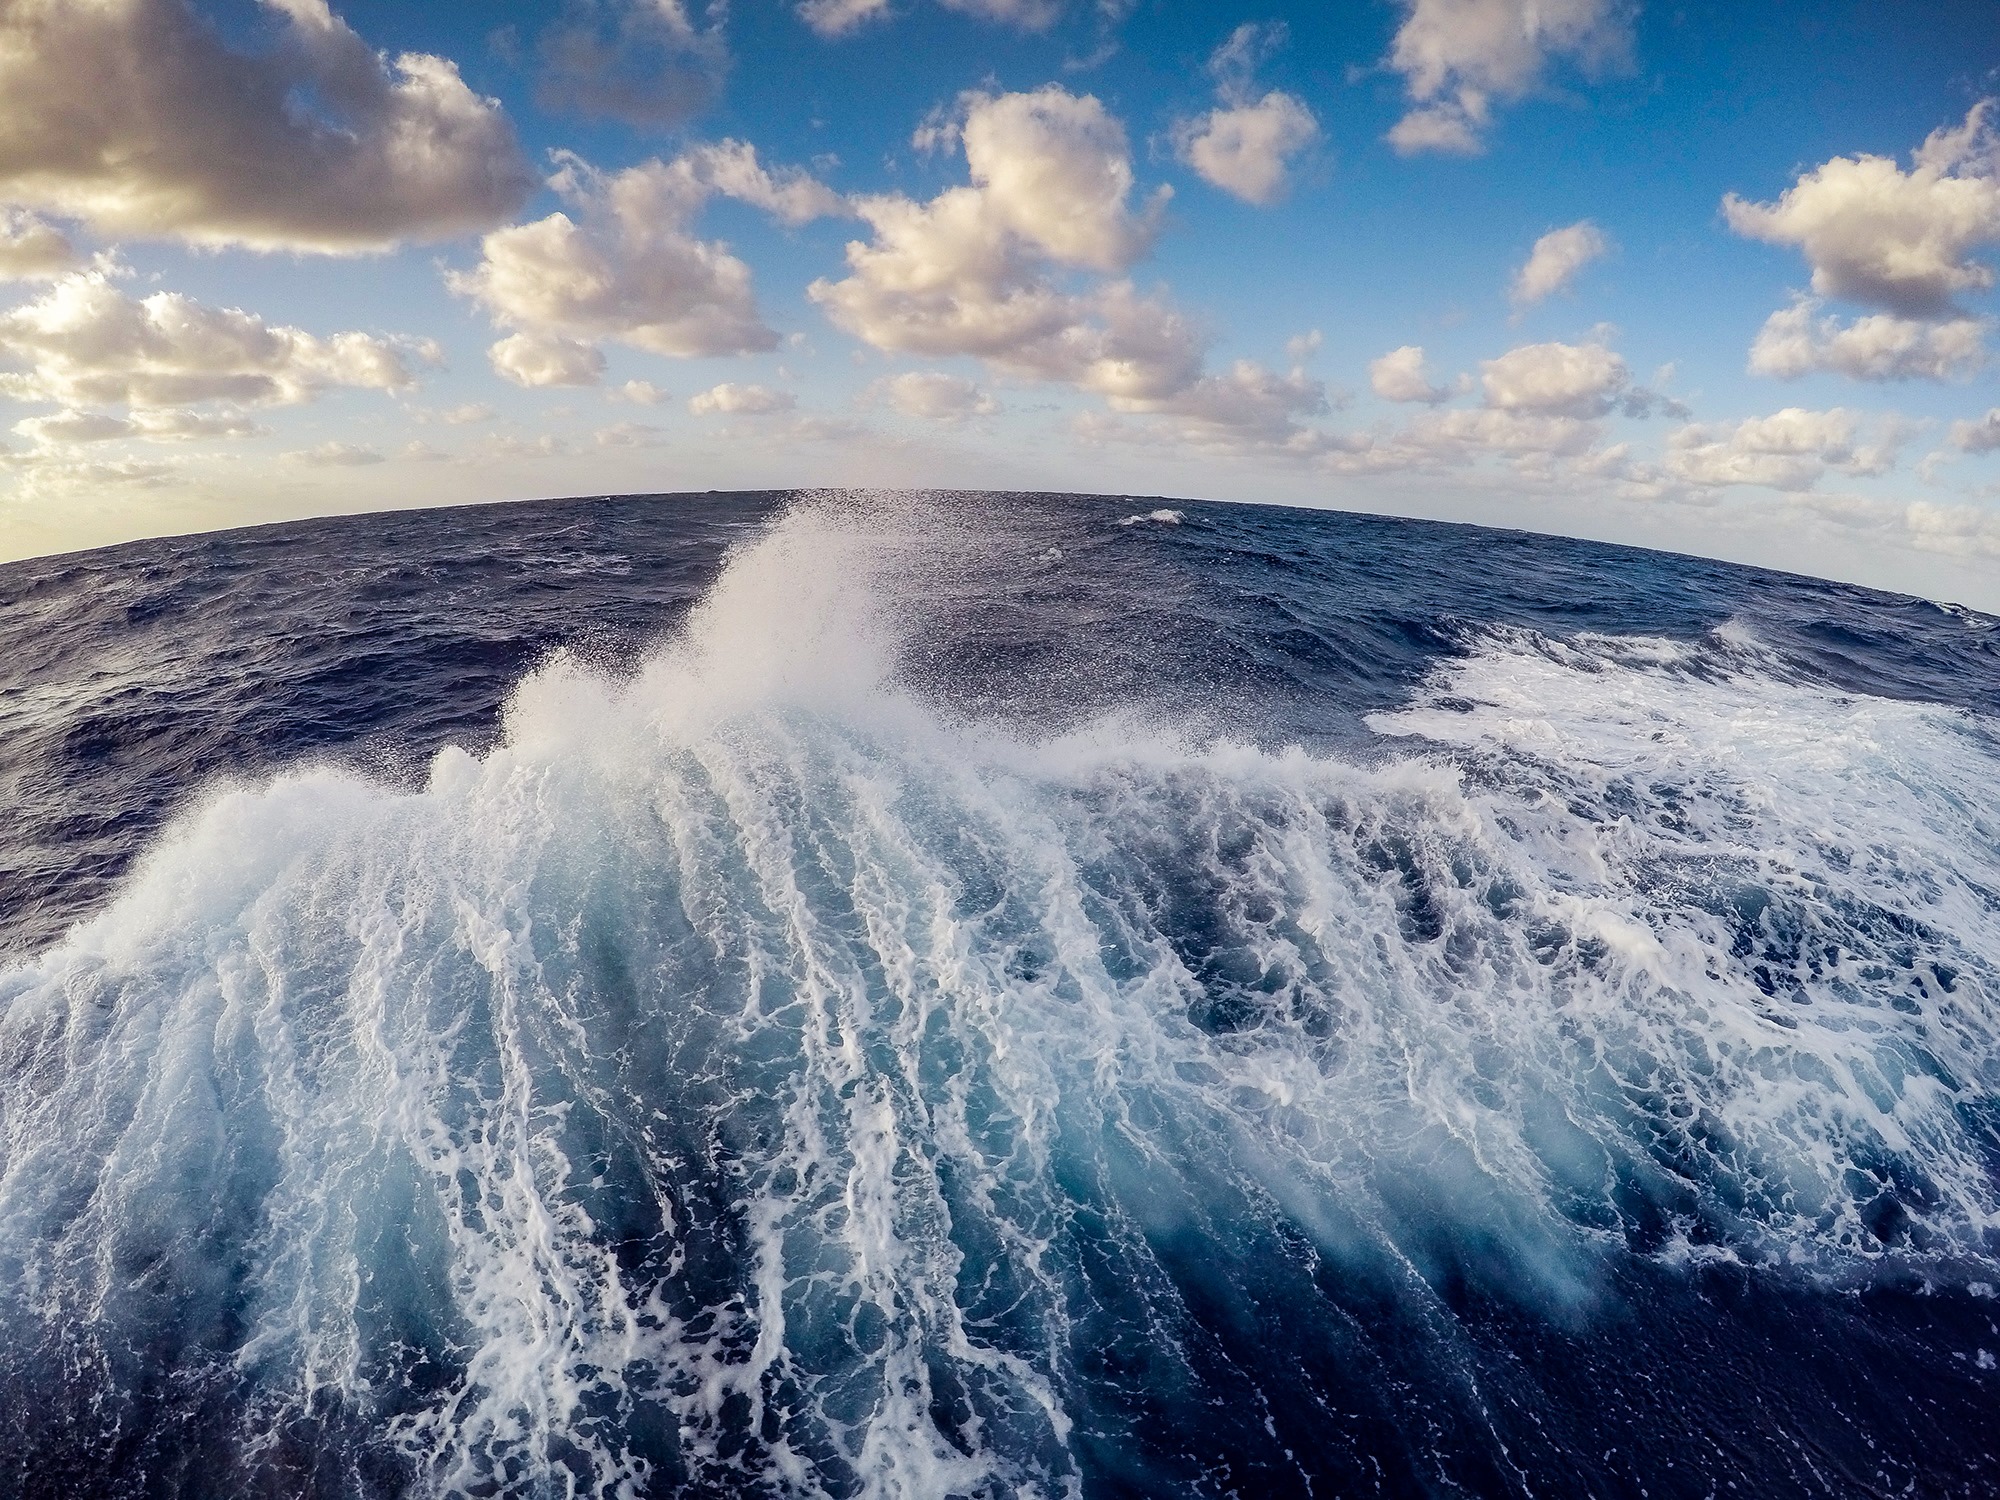 Fish-eye view of wake at sea. (Credit: NOAA/Office of Ocean Exploration)